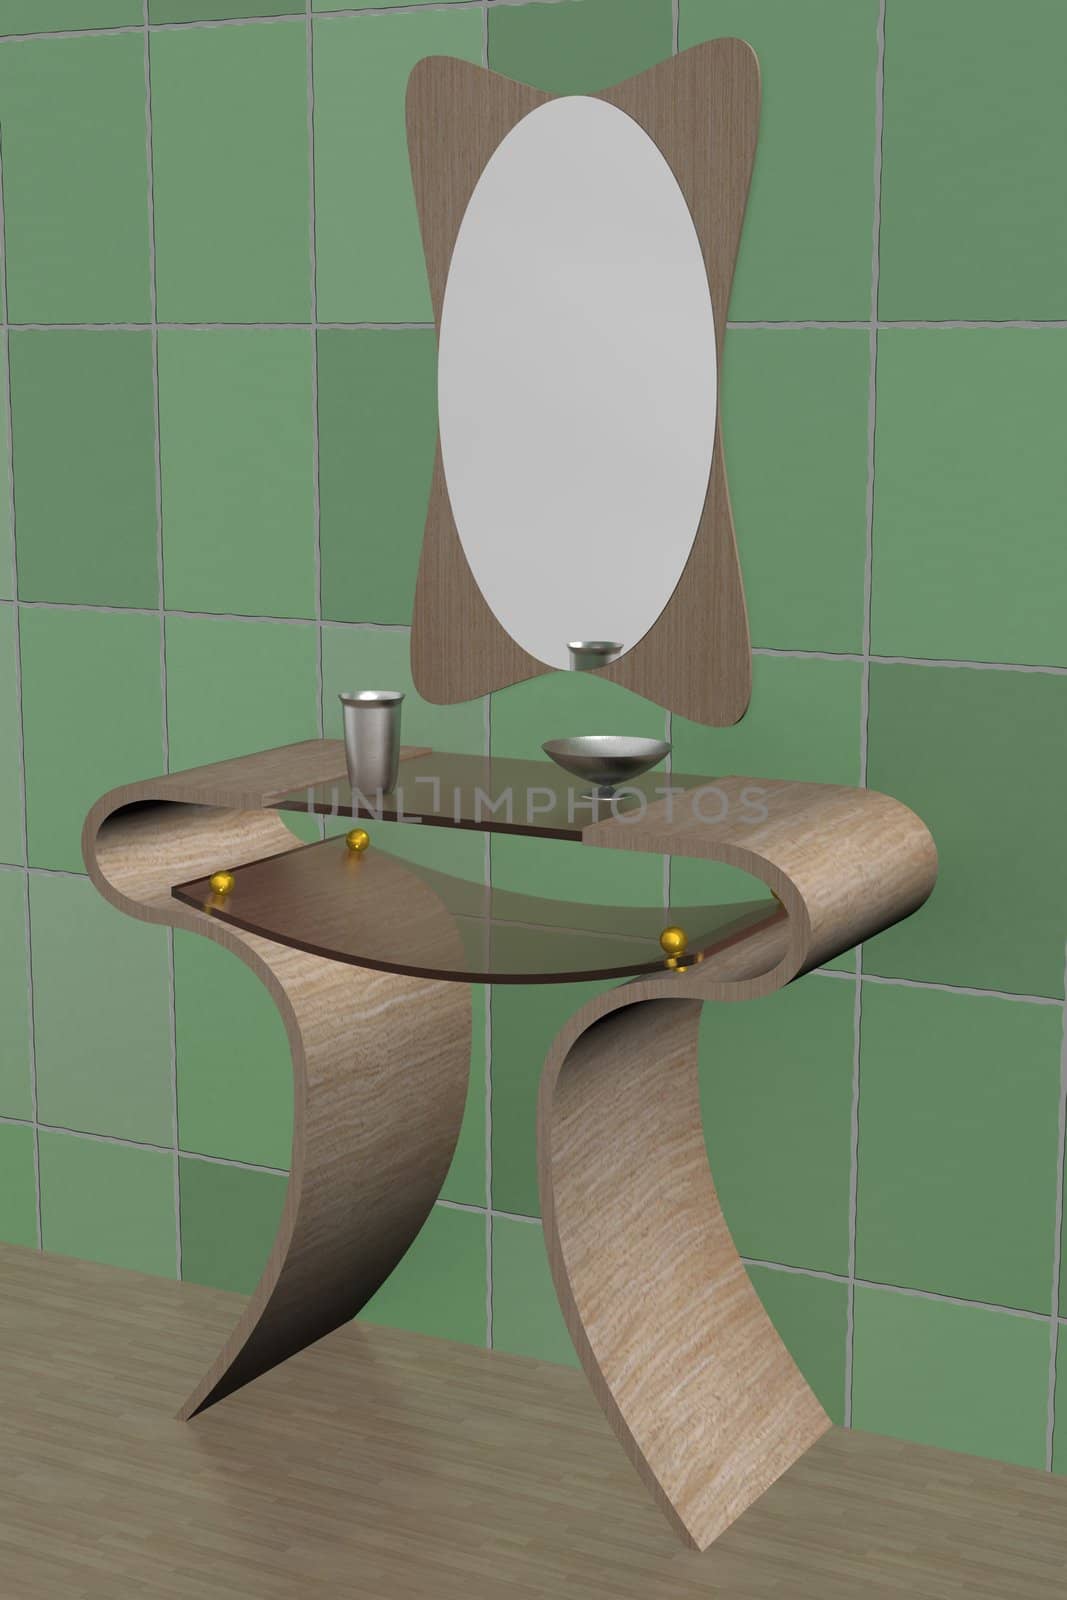 Interior of a bathroom. 3D image.